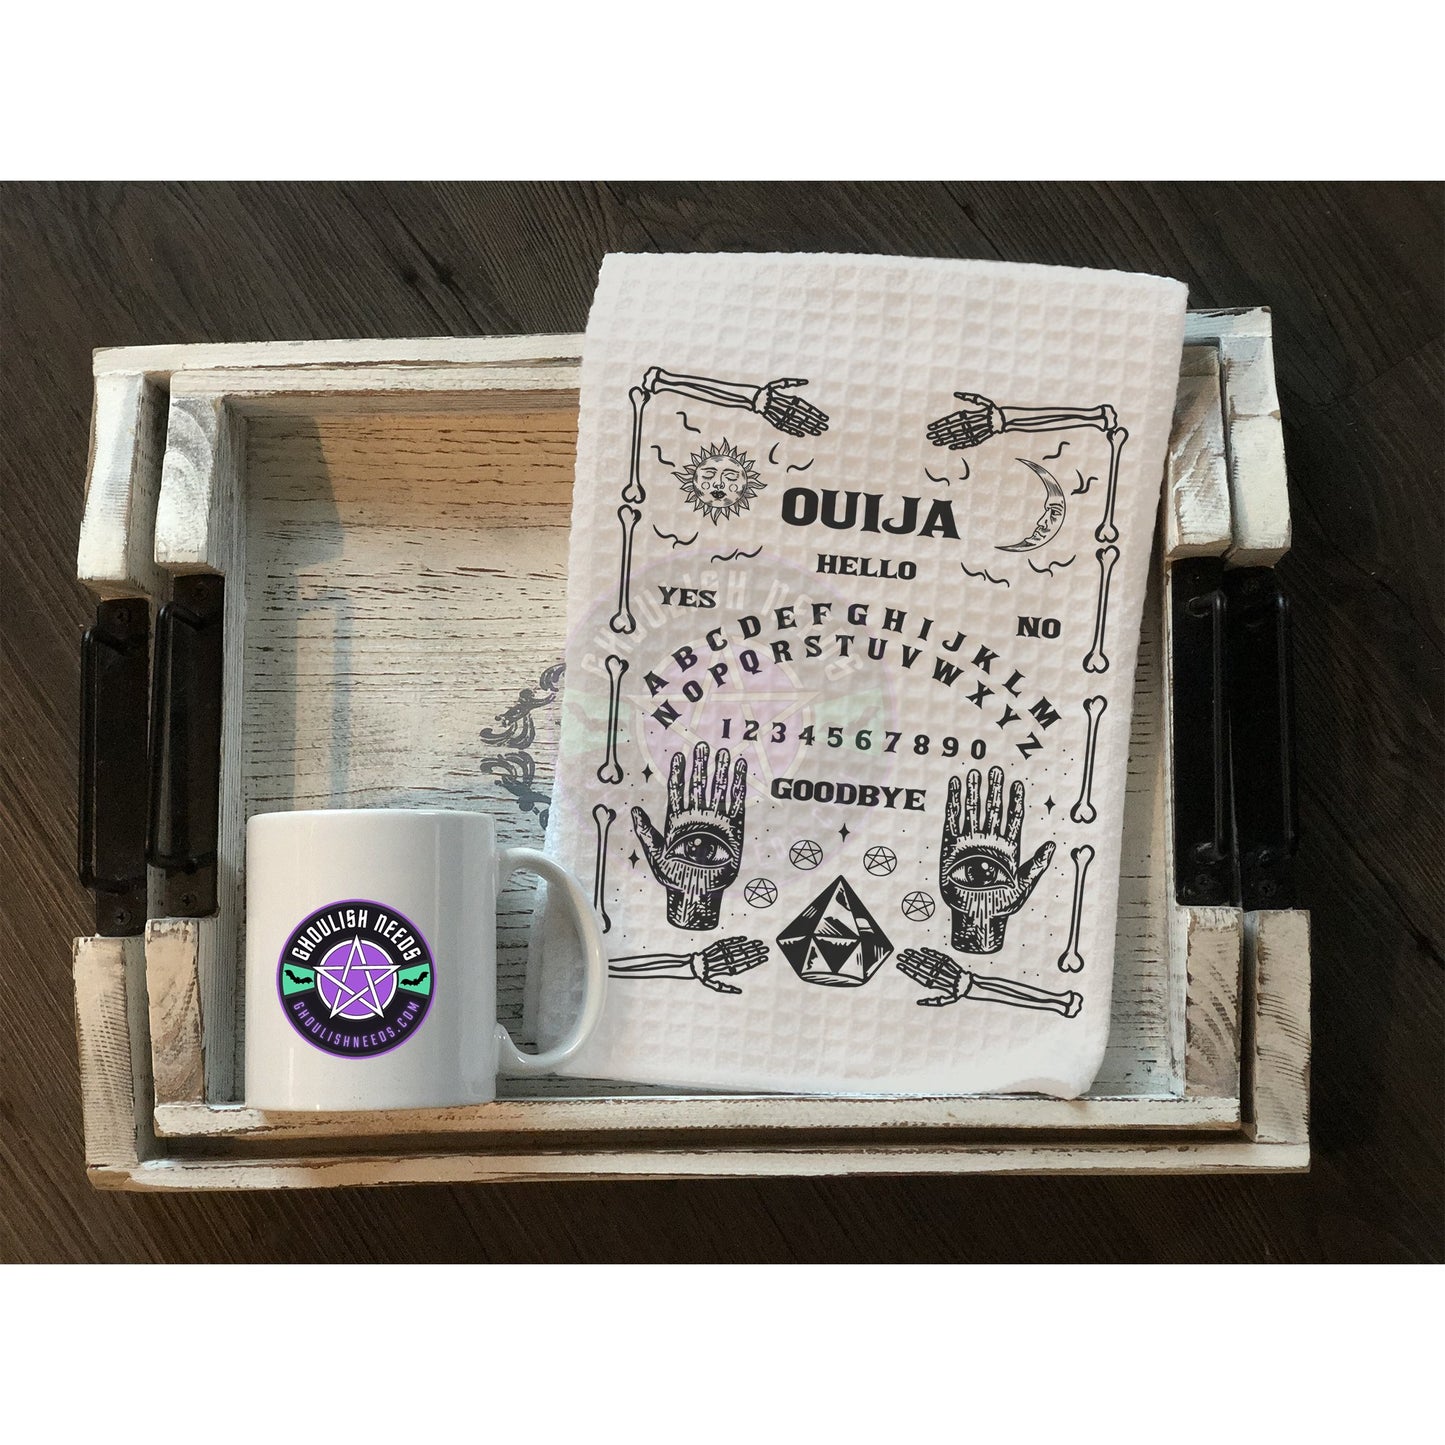 Ouija Hand towels / Tea Towel